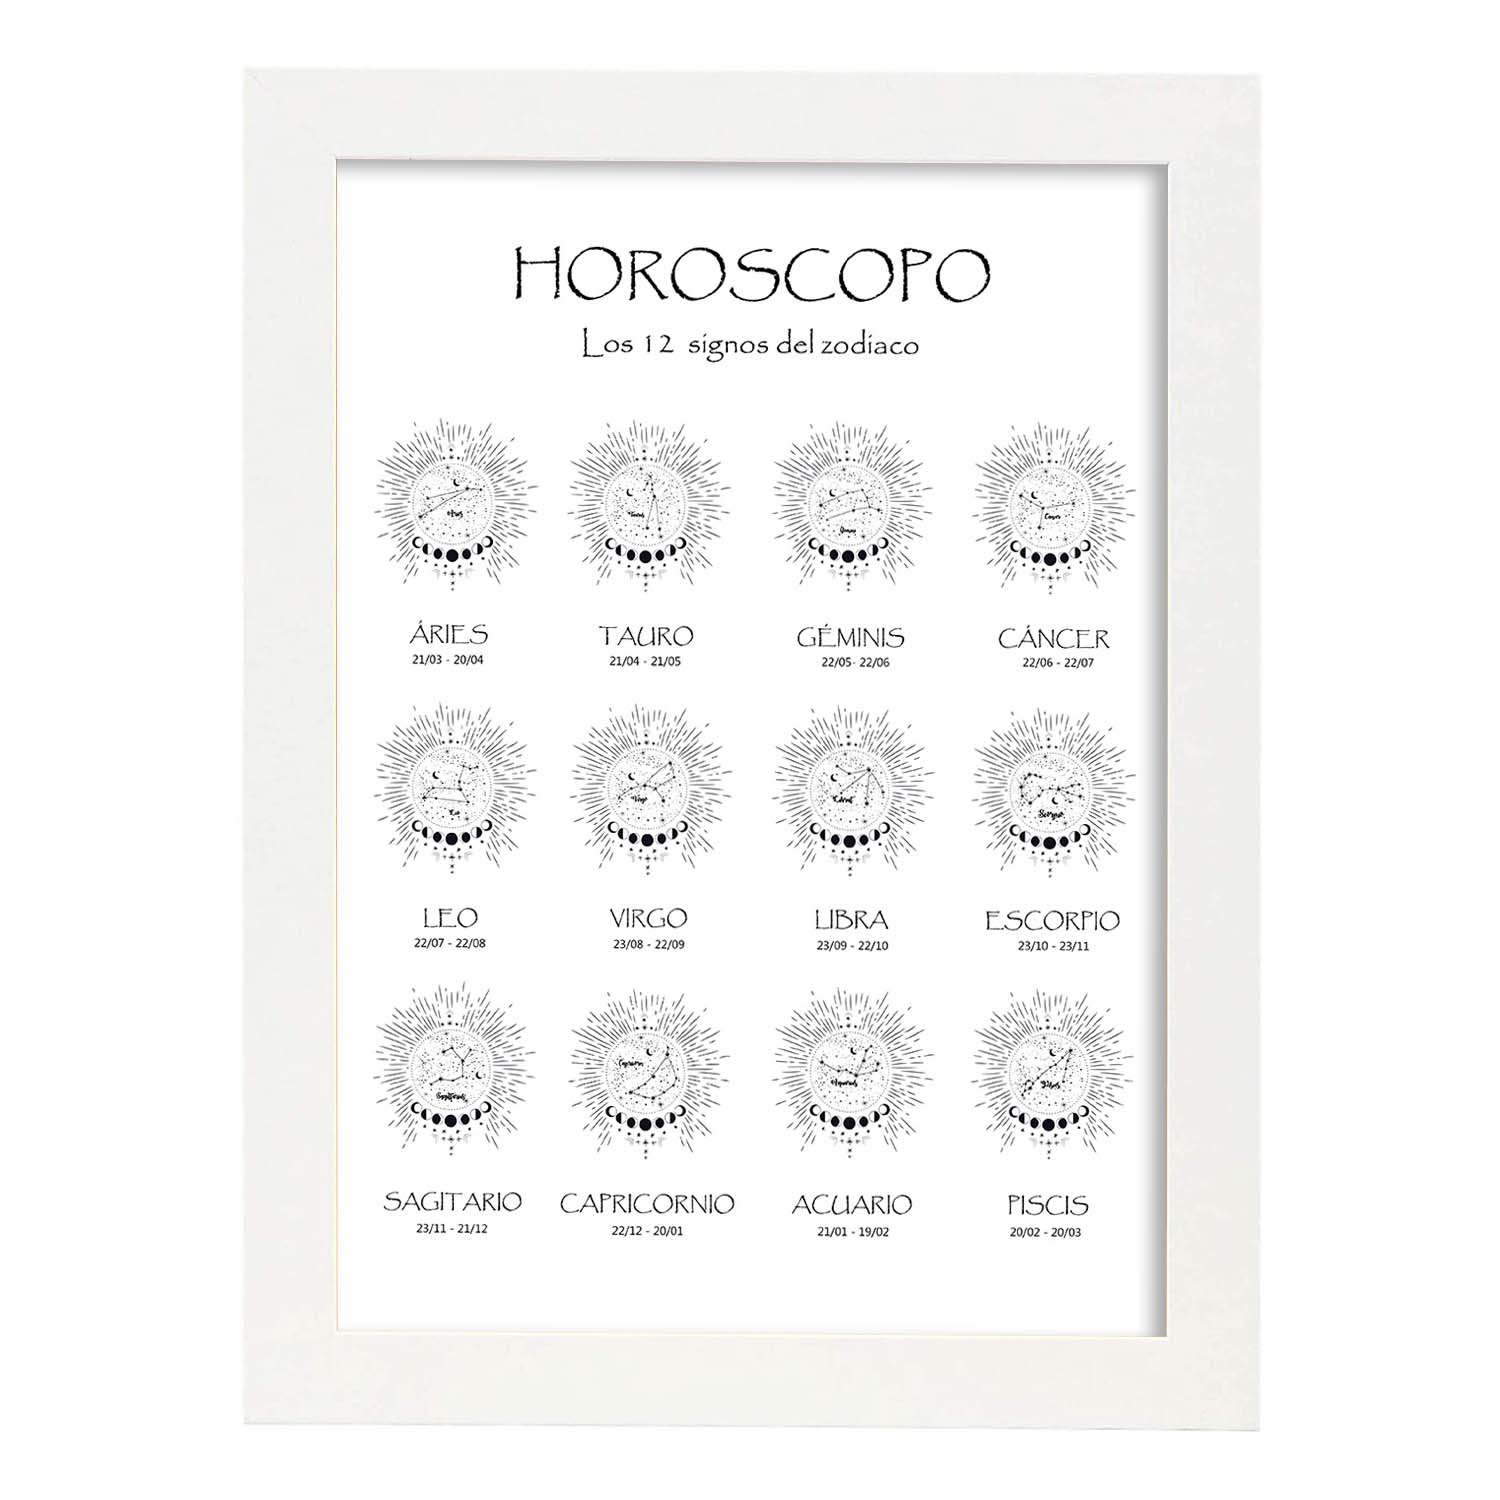 Poster de Horoscopos en español. Lamina de horoscopos y astrología.-Artwork-Nacnic-A4-Marco Blanco-Nacnic Estudio SL